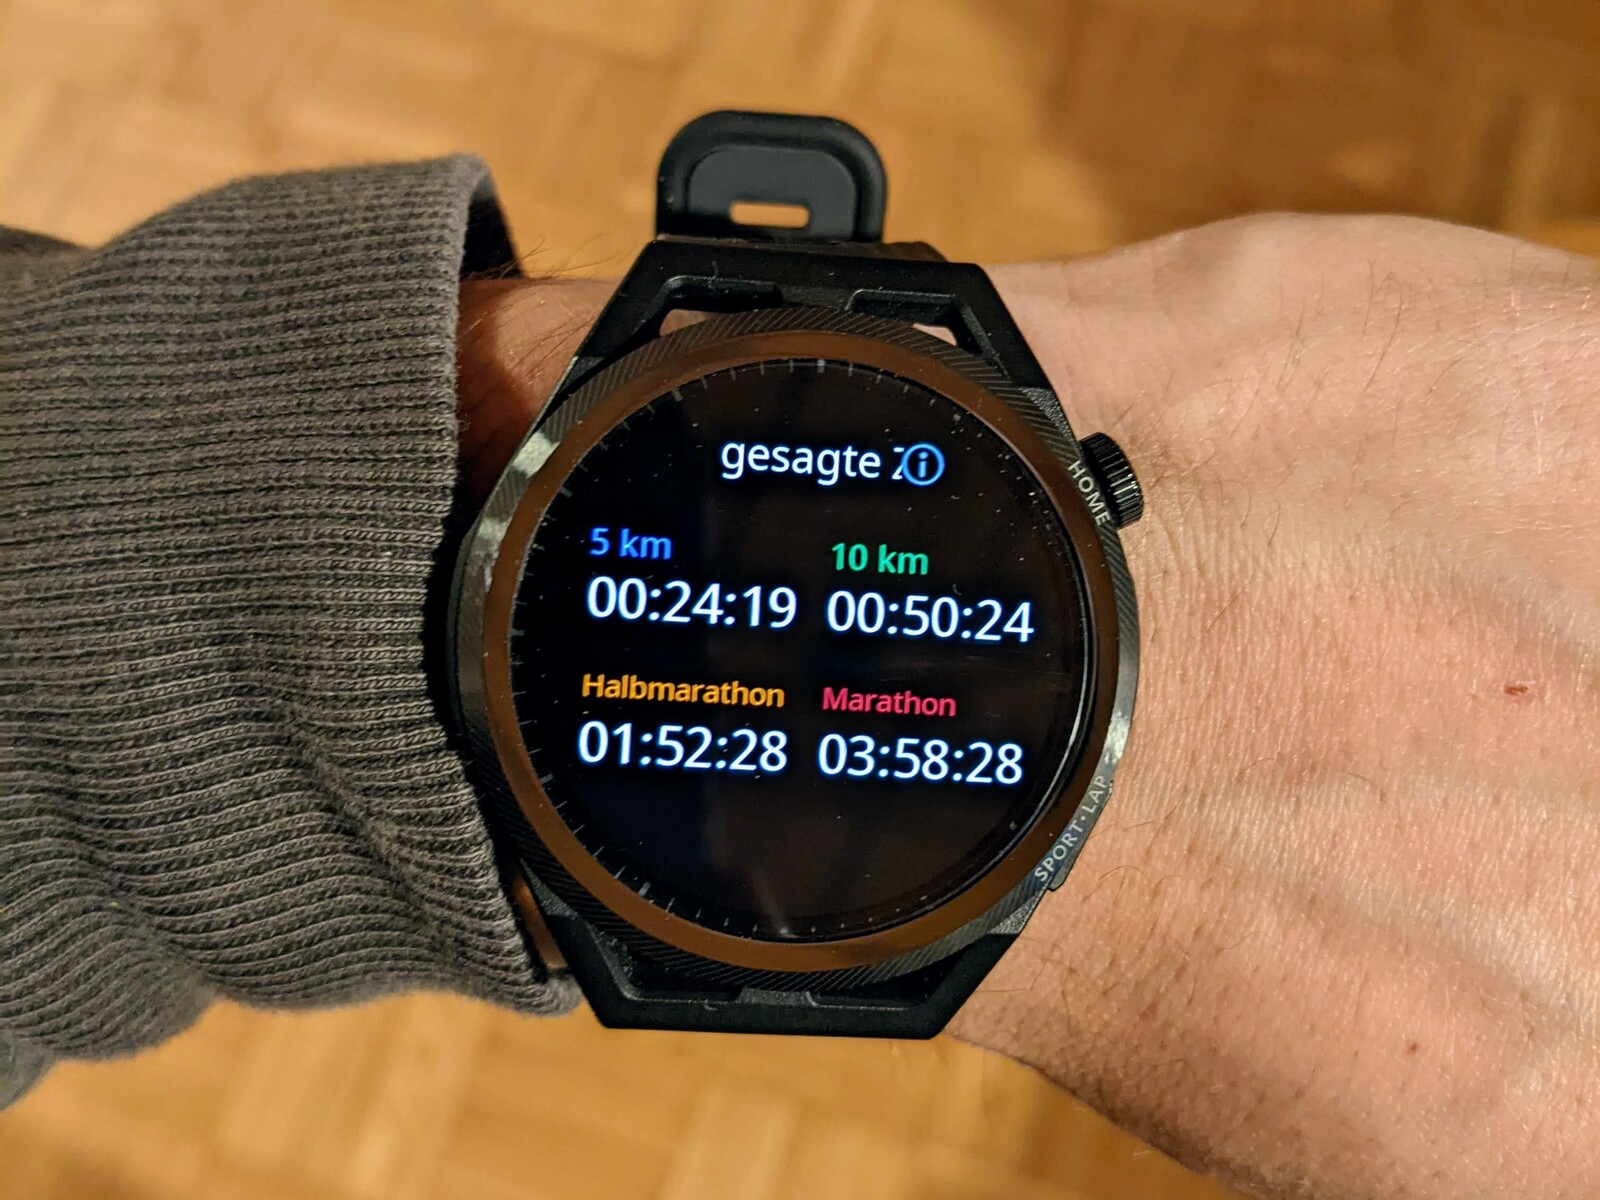 Huawei Watch GT Runner review - Smartwatch for sports fans 